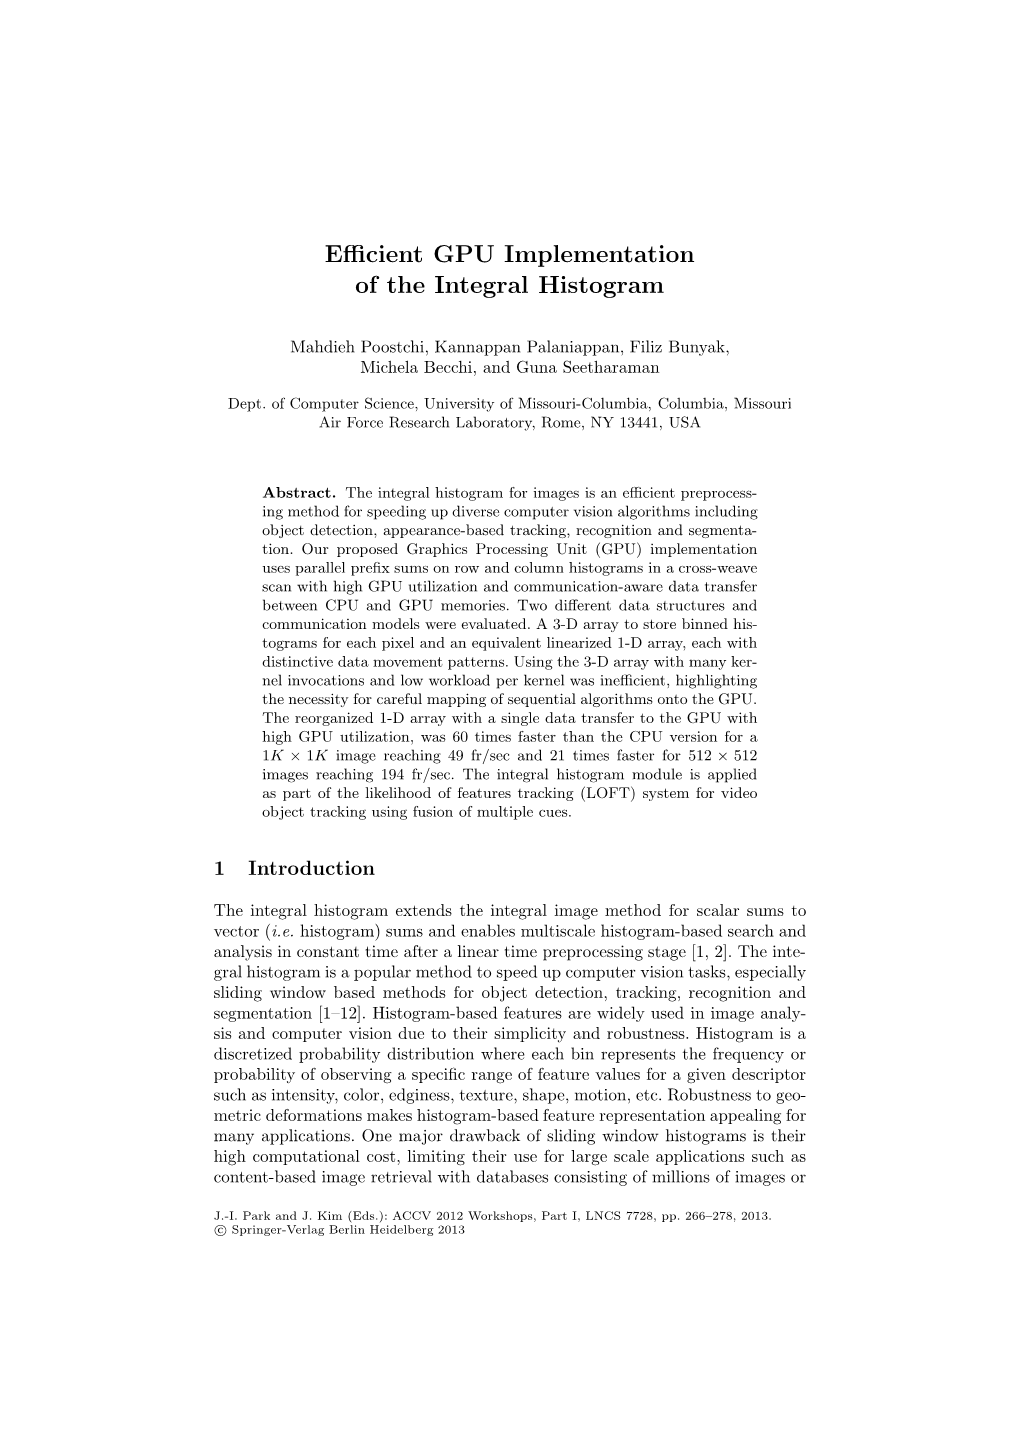 Efficient GPU Implementation of the Integral Histogram